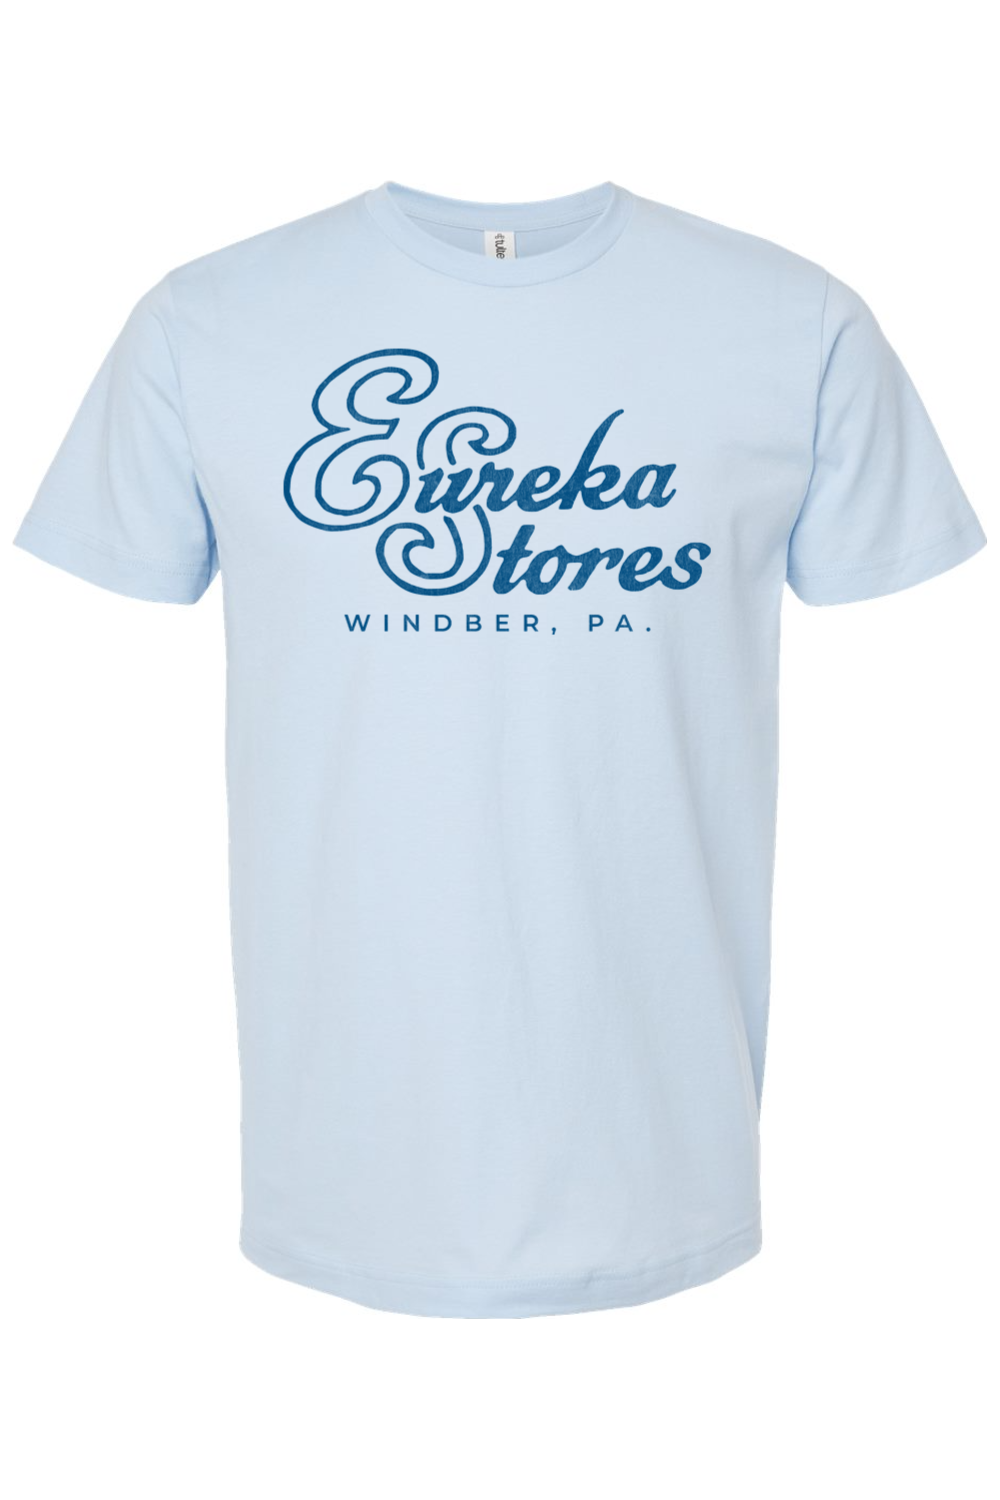 Eureka Stores - Windber, PA - Yinzylvania